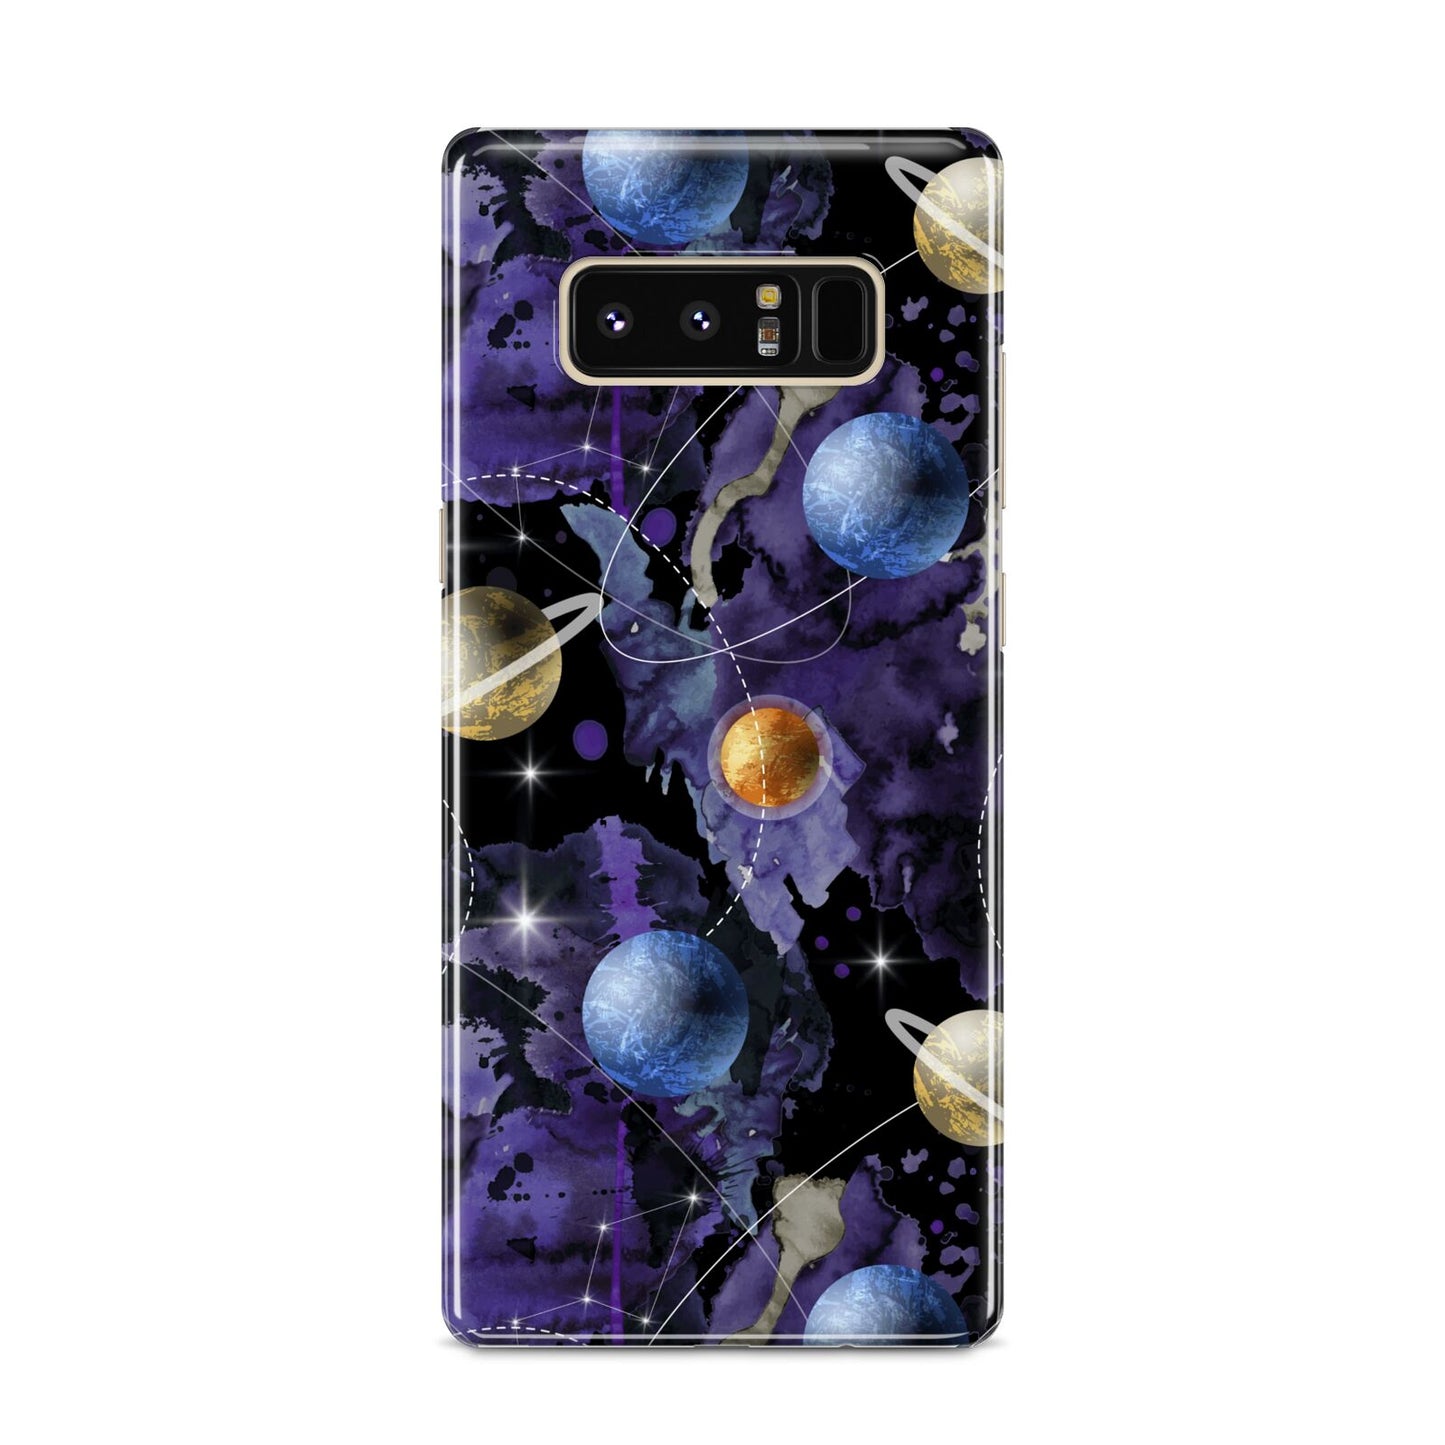 Planet Samsung Galaxy S8 Case